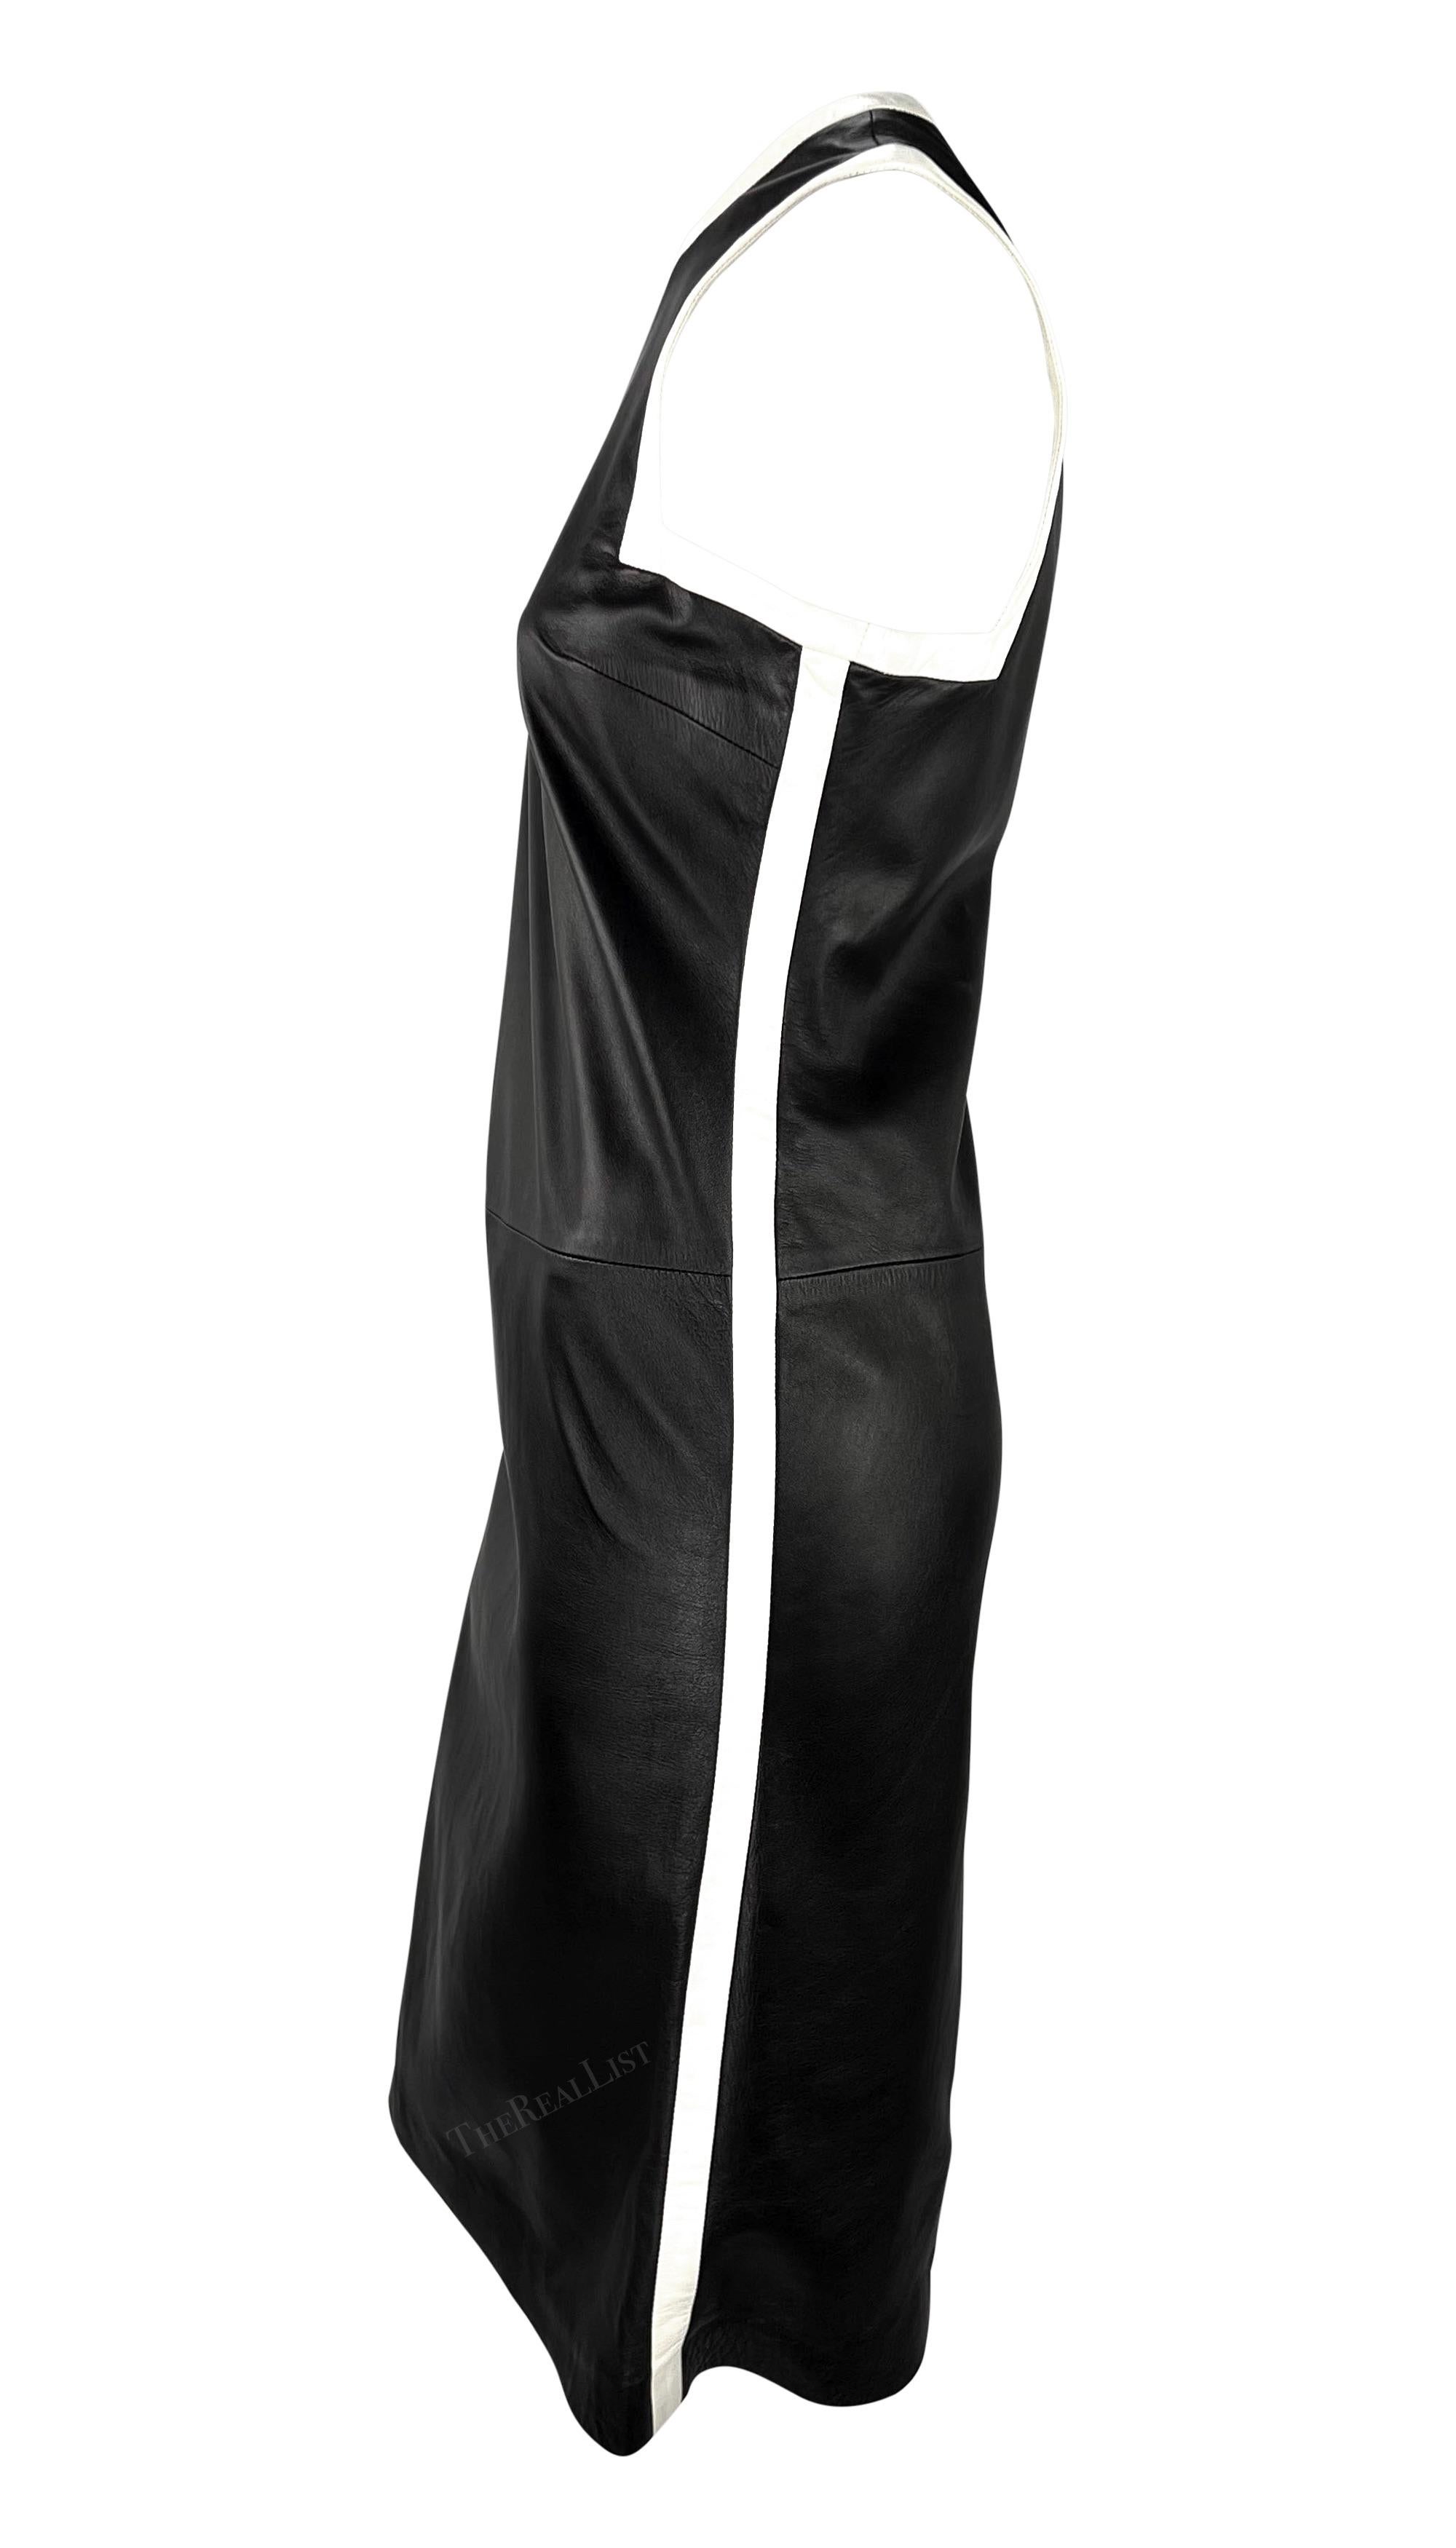 S/S 2001 Ralph Lauren Black Runway Black Leather White Trim Sleeveless Dress For Sale 3